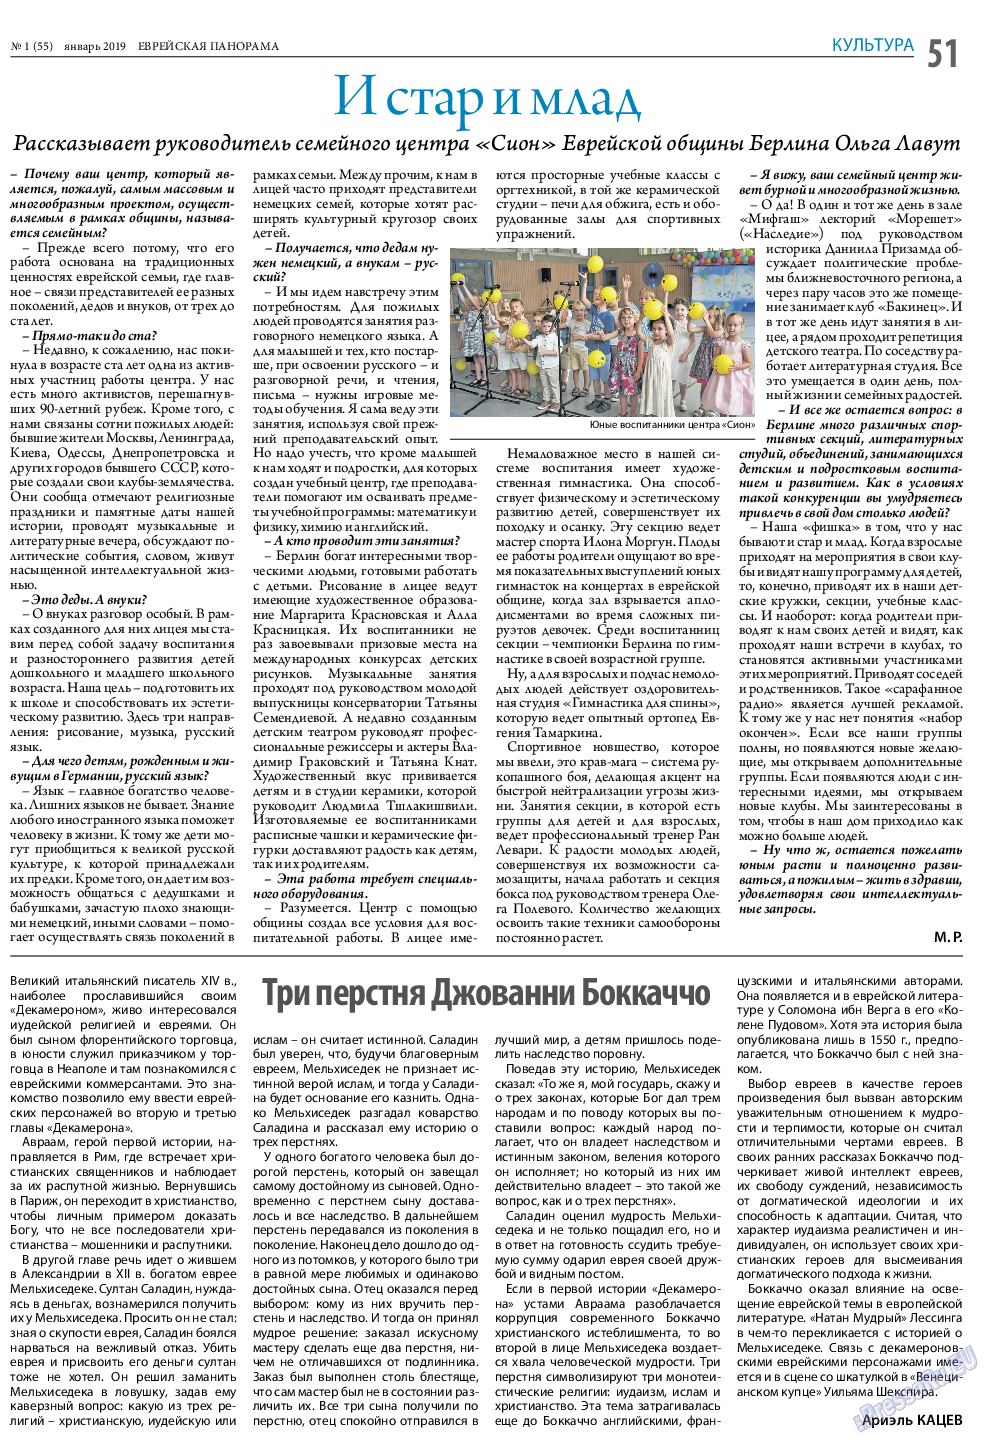 Еврейская панорама, газета. 2019 №1 стр.51